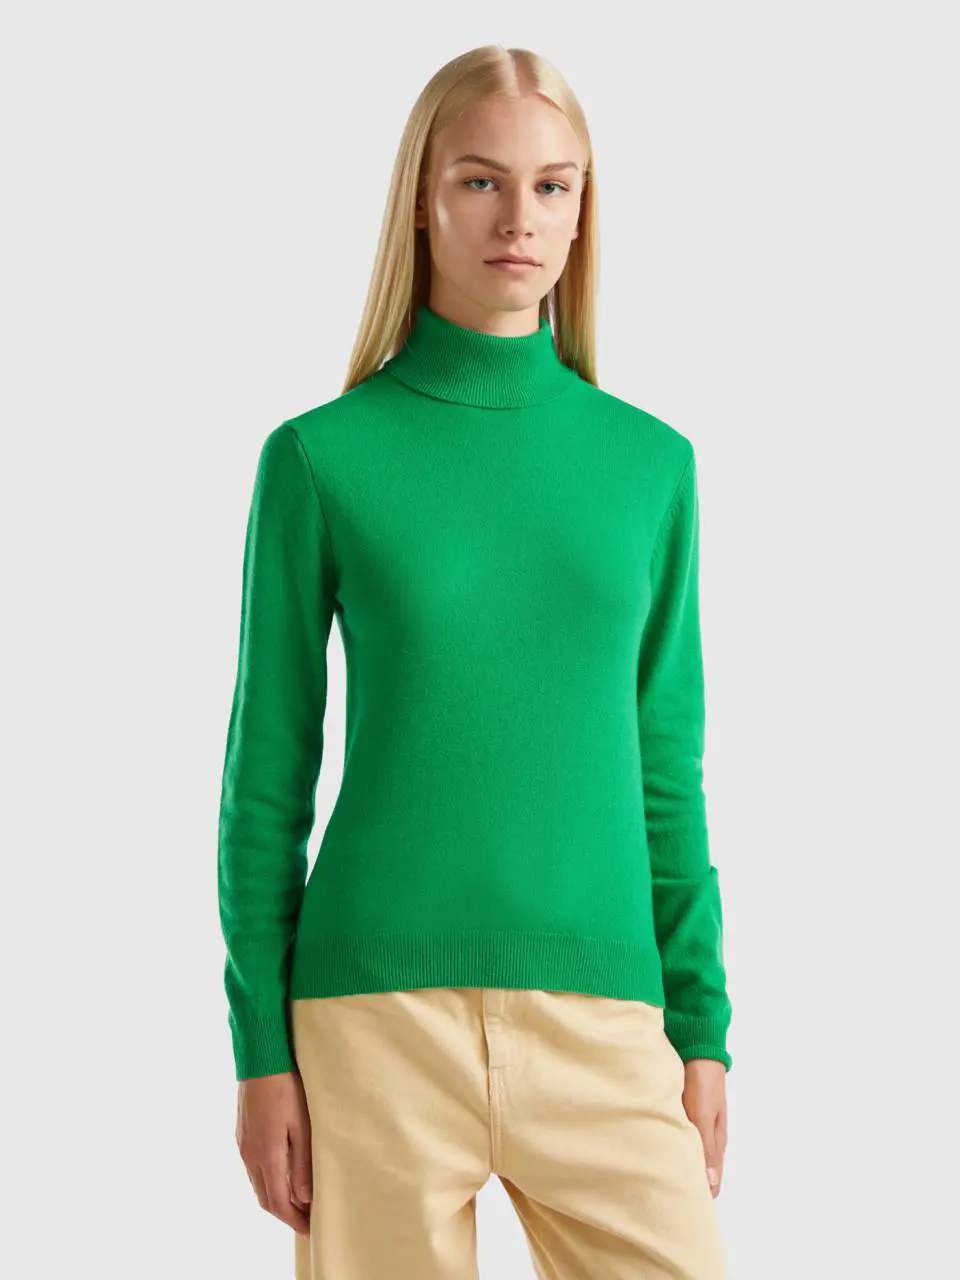 Benetton green turtleneck in pure merino wool. 1